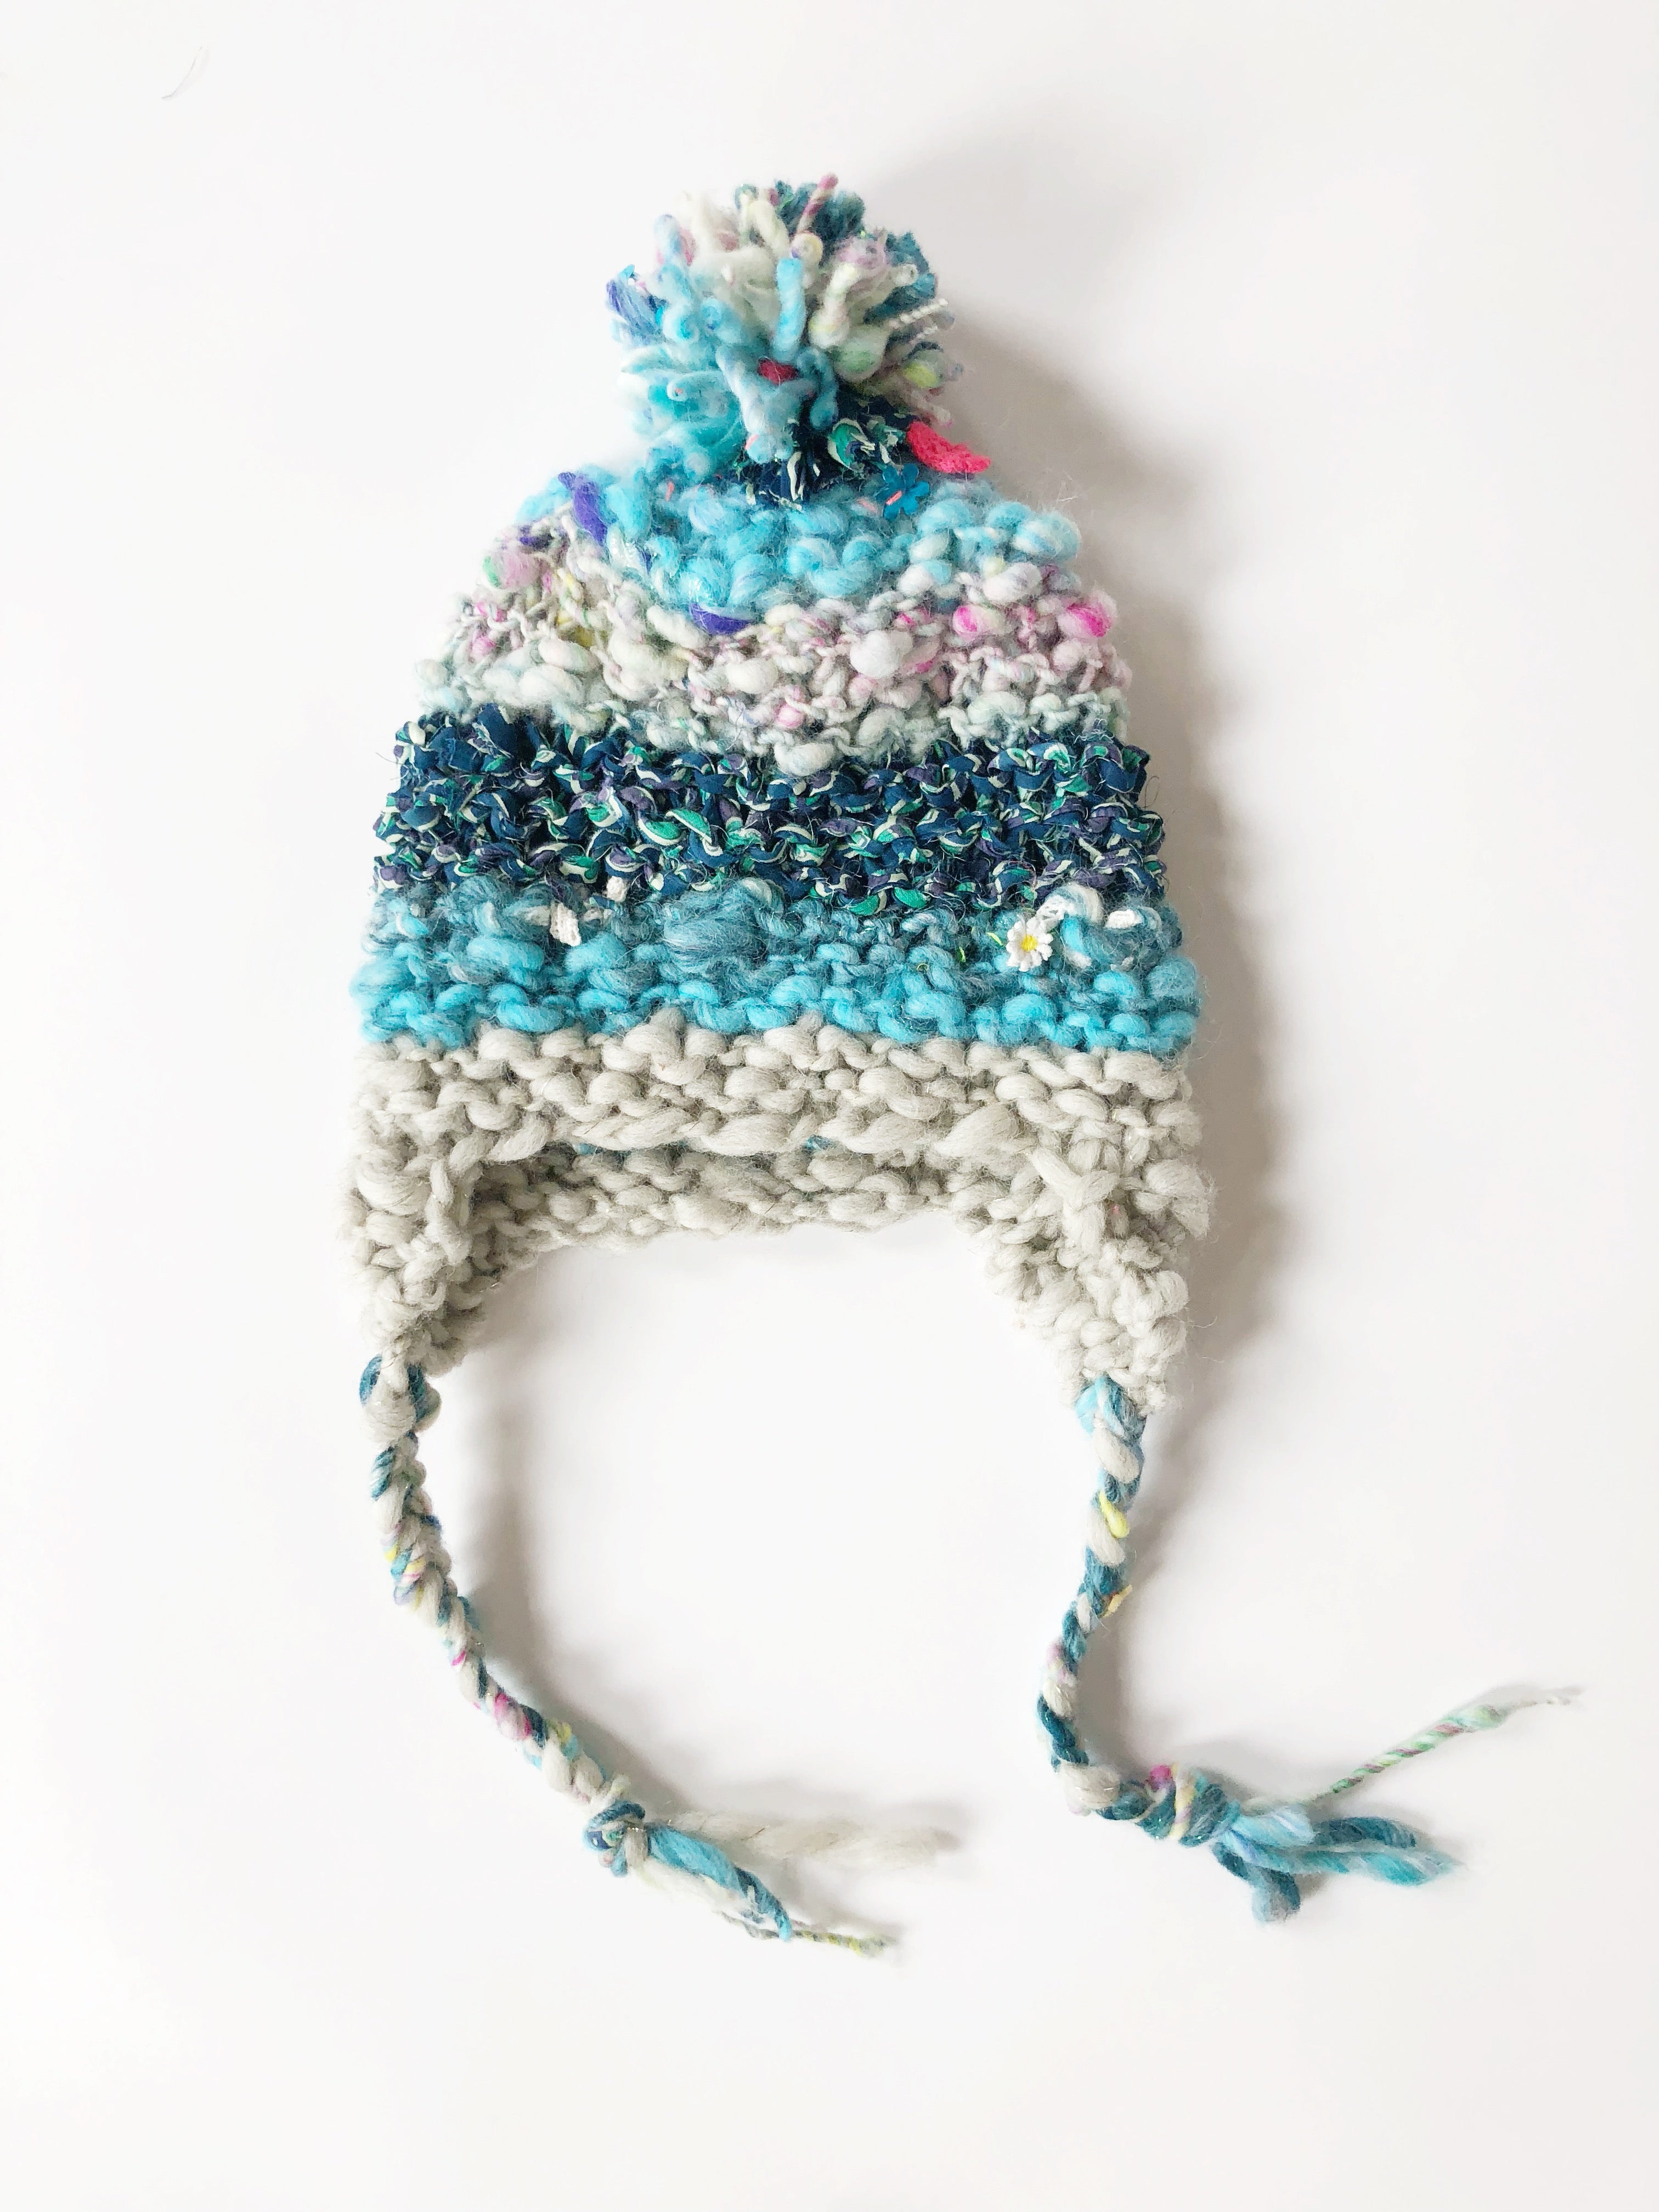 Knit Hat Mini Maker Kit from Leisure Arts - Stitches n Scraps